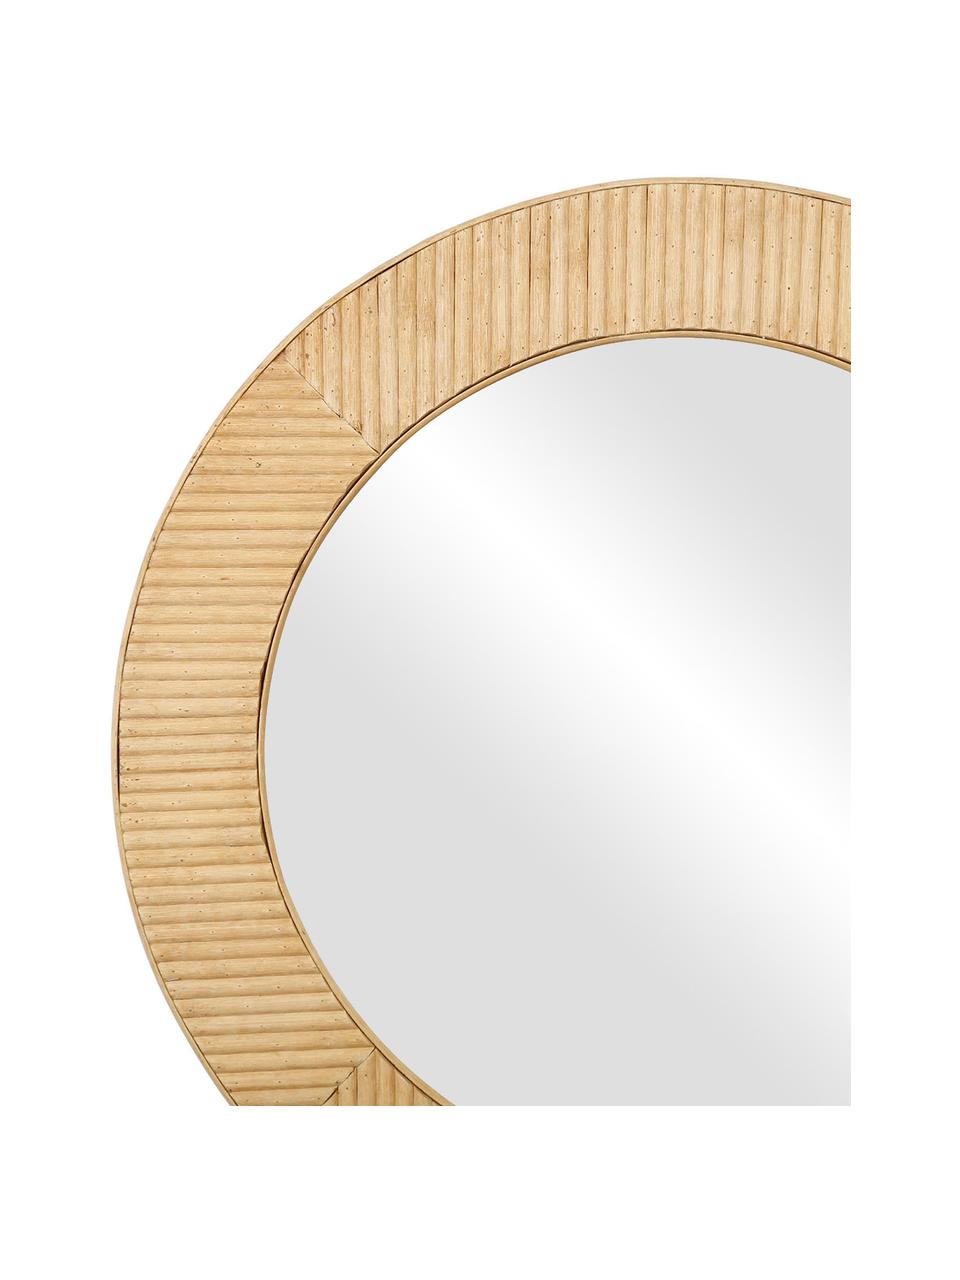 Kulaté nástěnné zrcadlo s bambusovým rámem Solair, Bambus, Ø 60 cm, H 2 cm